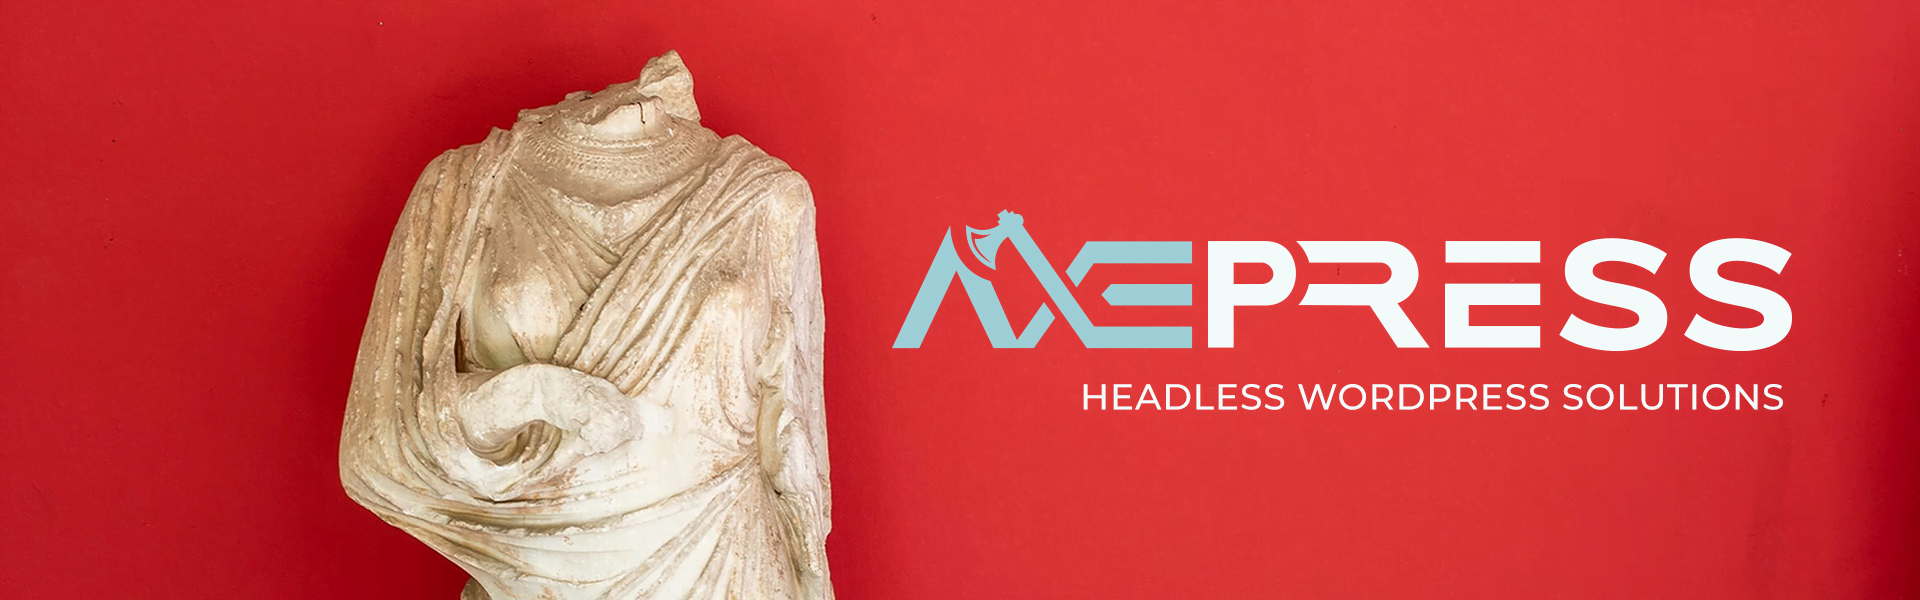 AxePress Development - Headless WordPress Solutions